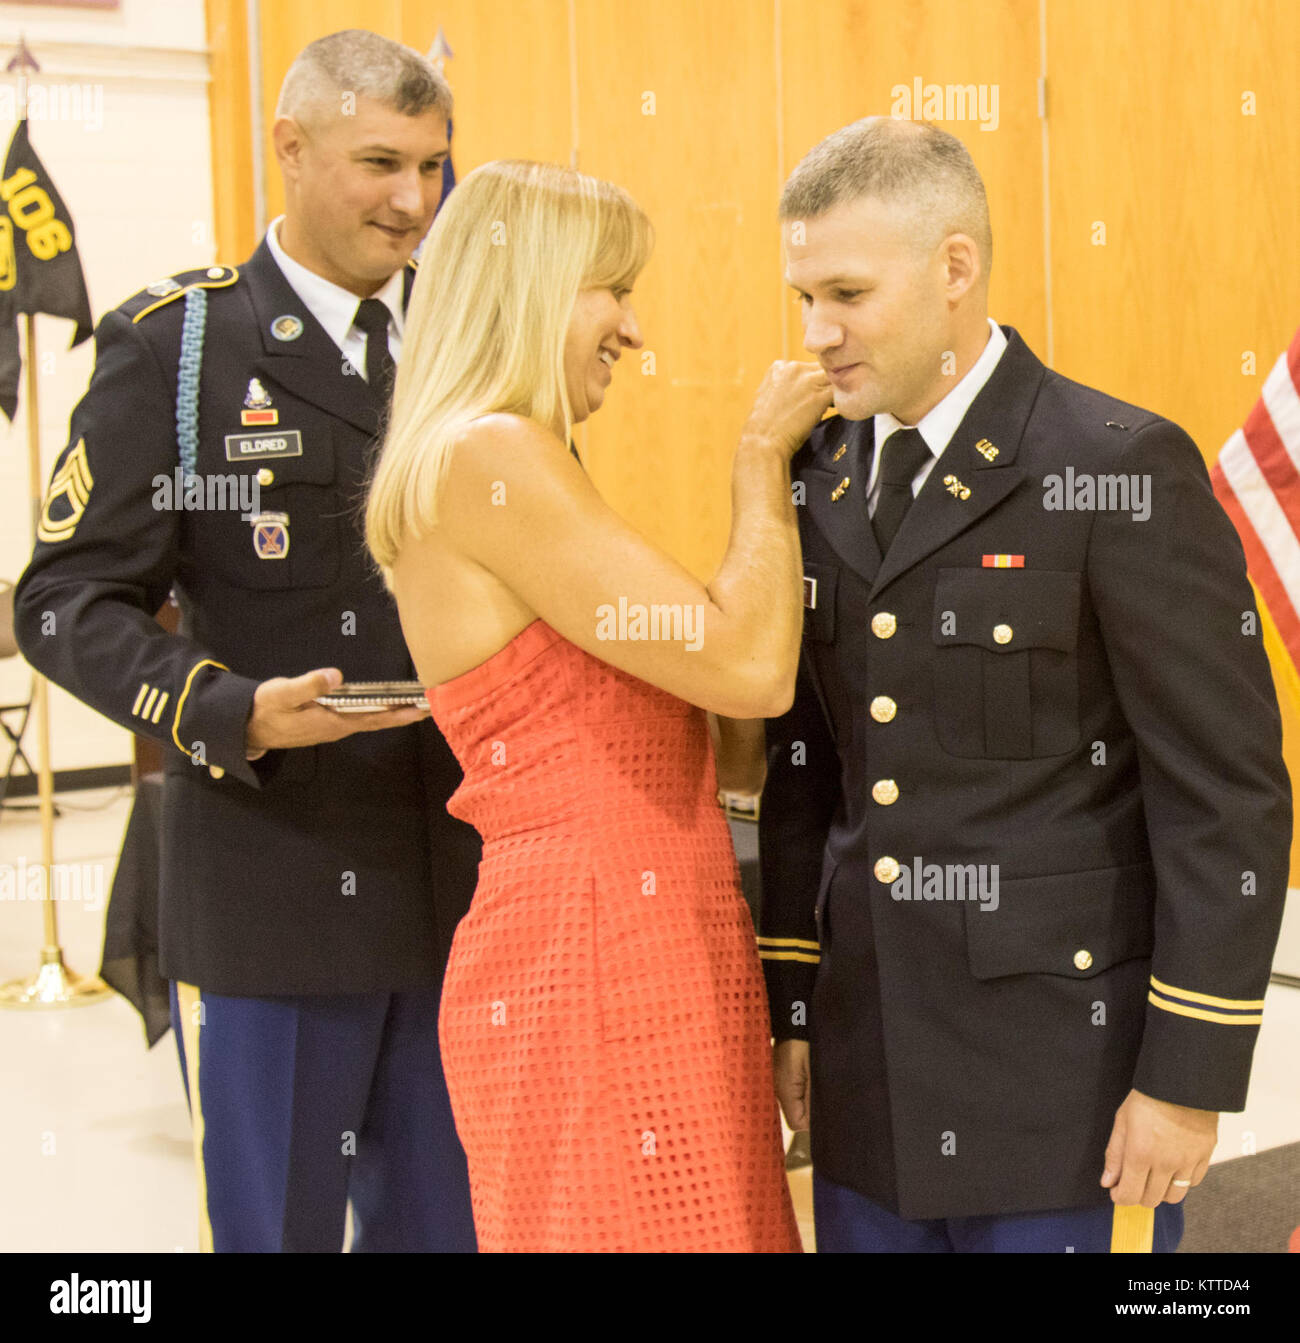 US Army OCS Officer Candidate School dress uniform patch c/e 